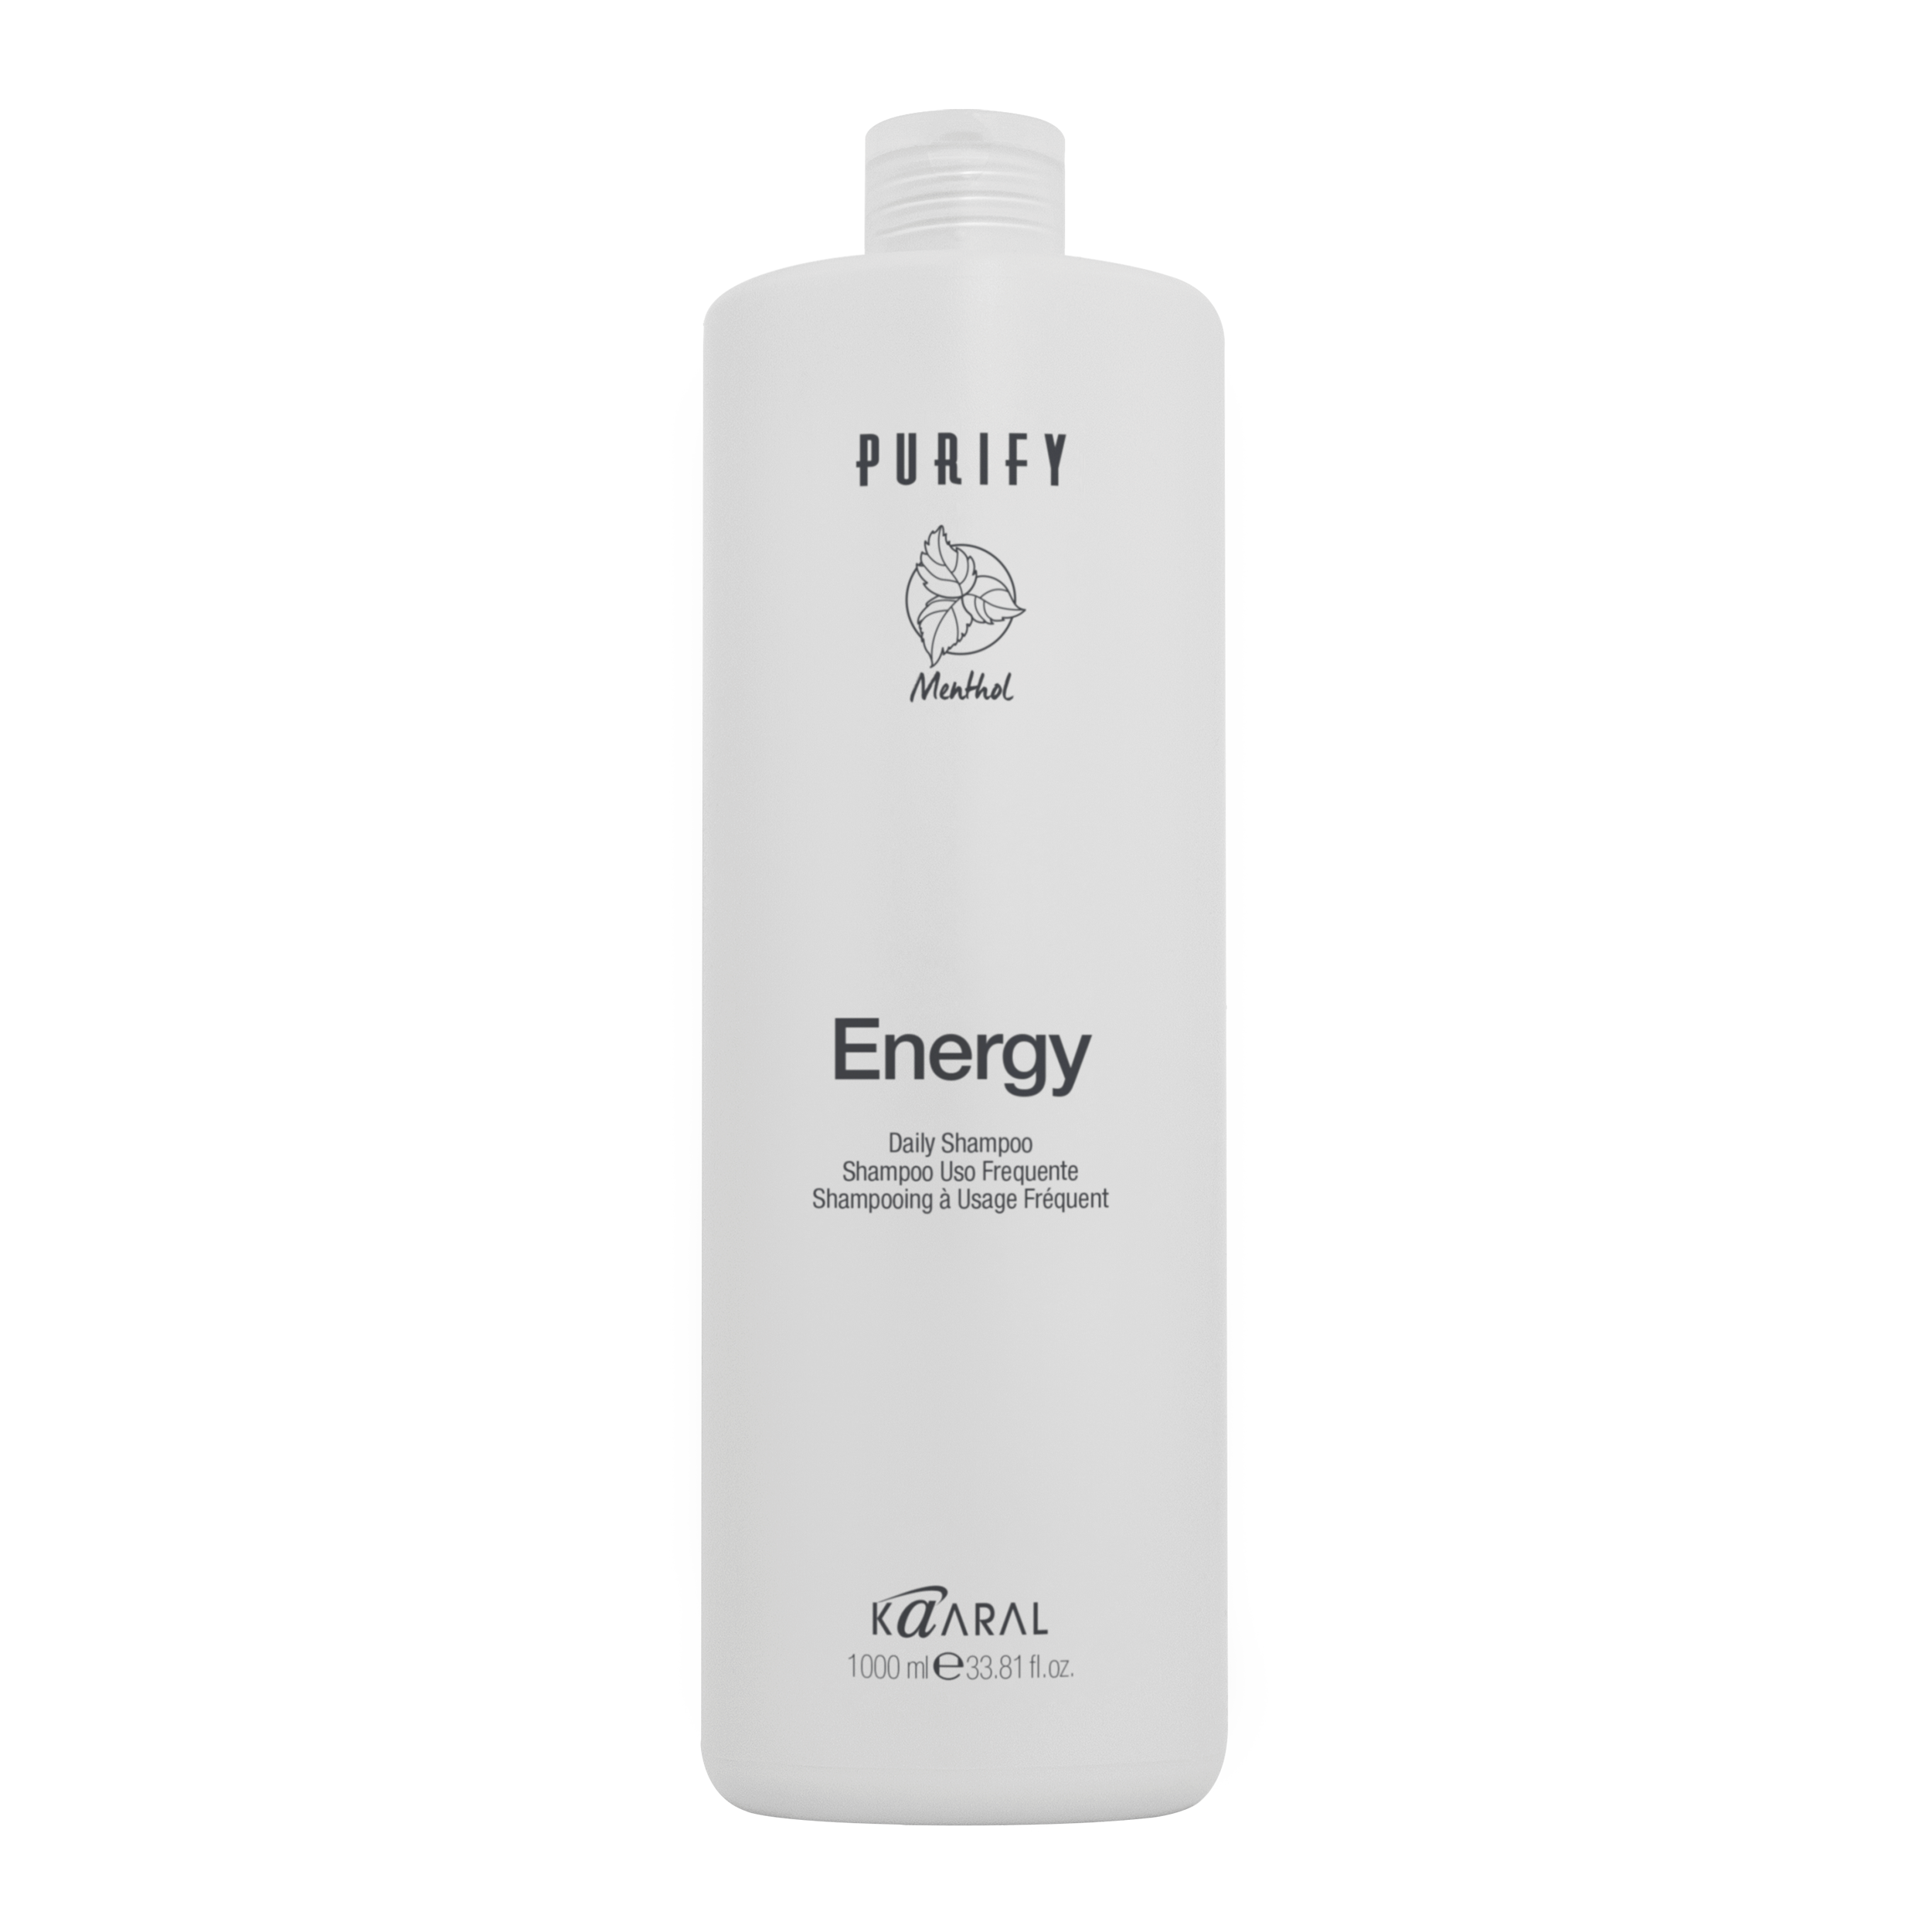 Kaaral - Purify Energy Shampoo Liter Size - Creata Beauty - Professional Beauty Products